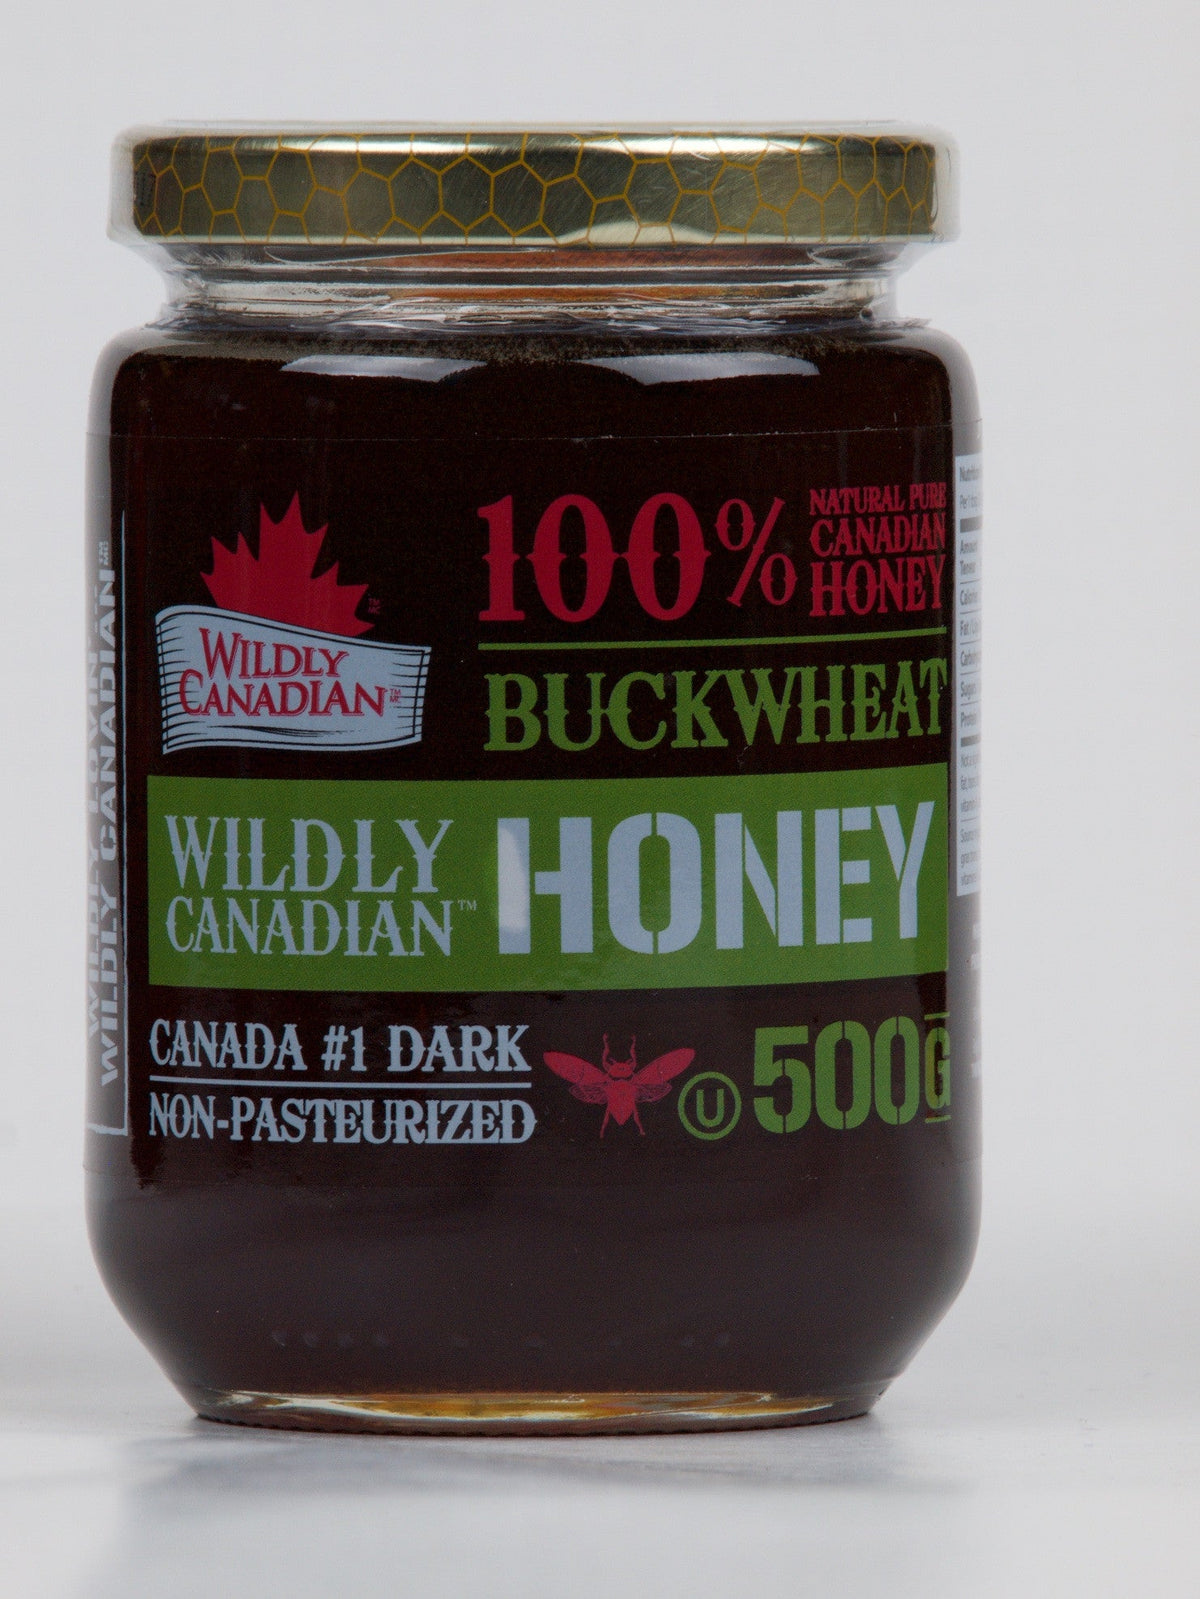 Non-pasteurized Buckwheat Honey